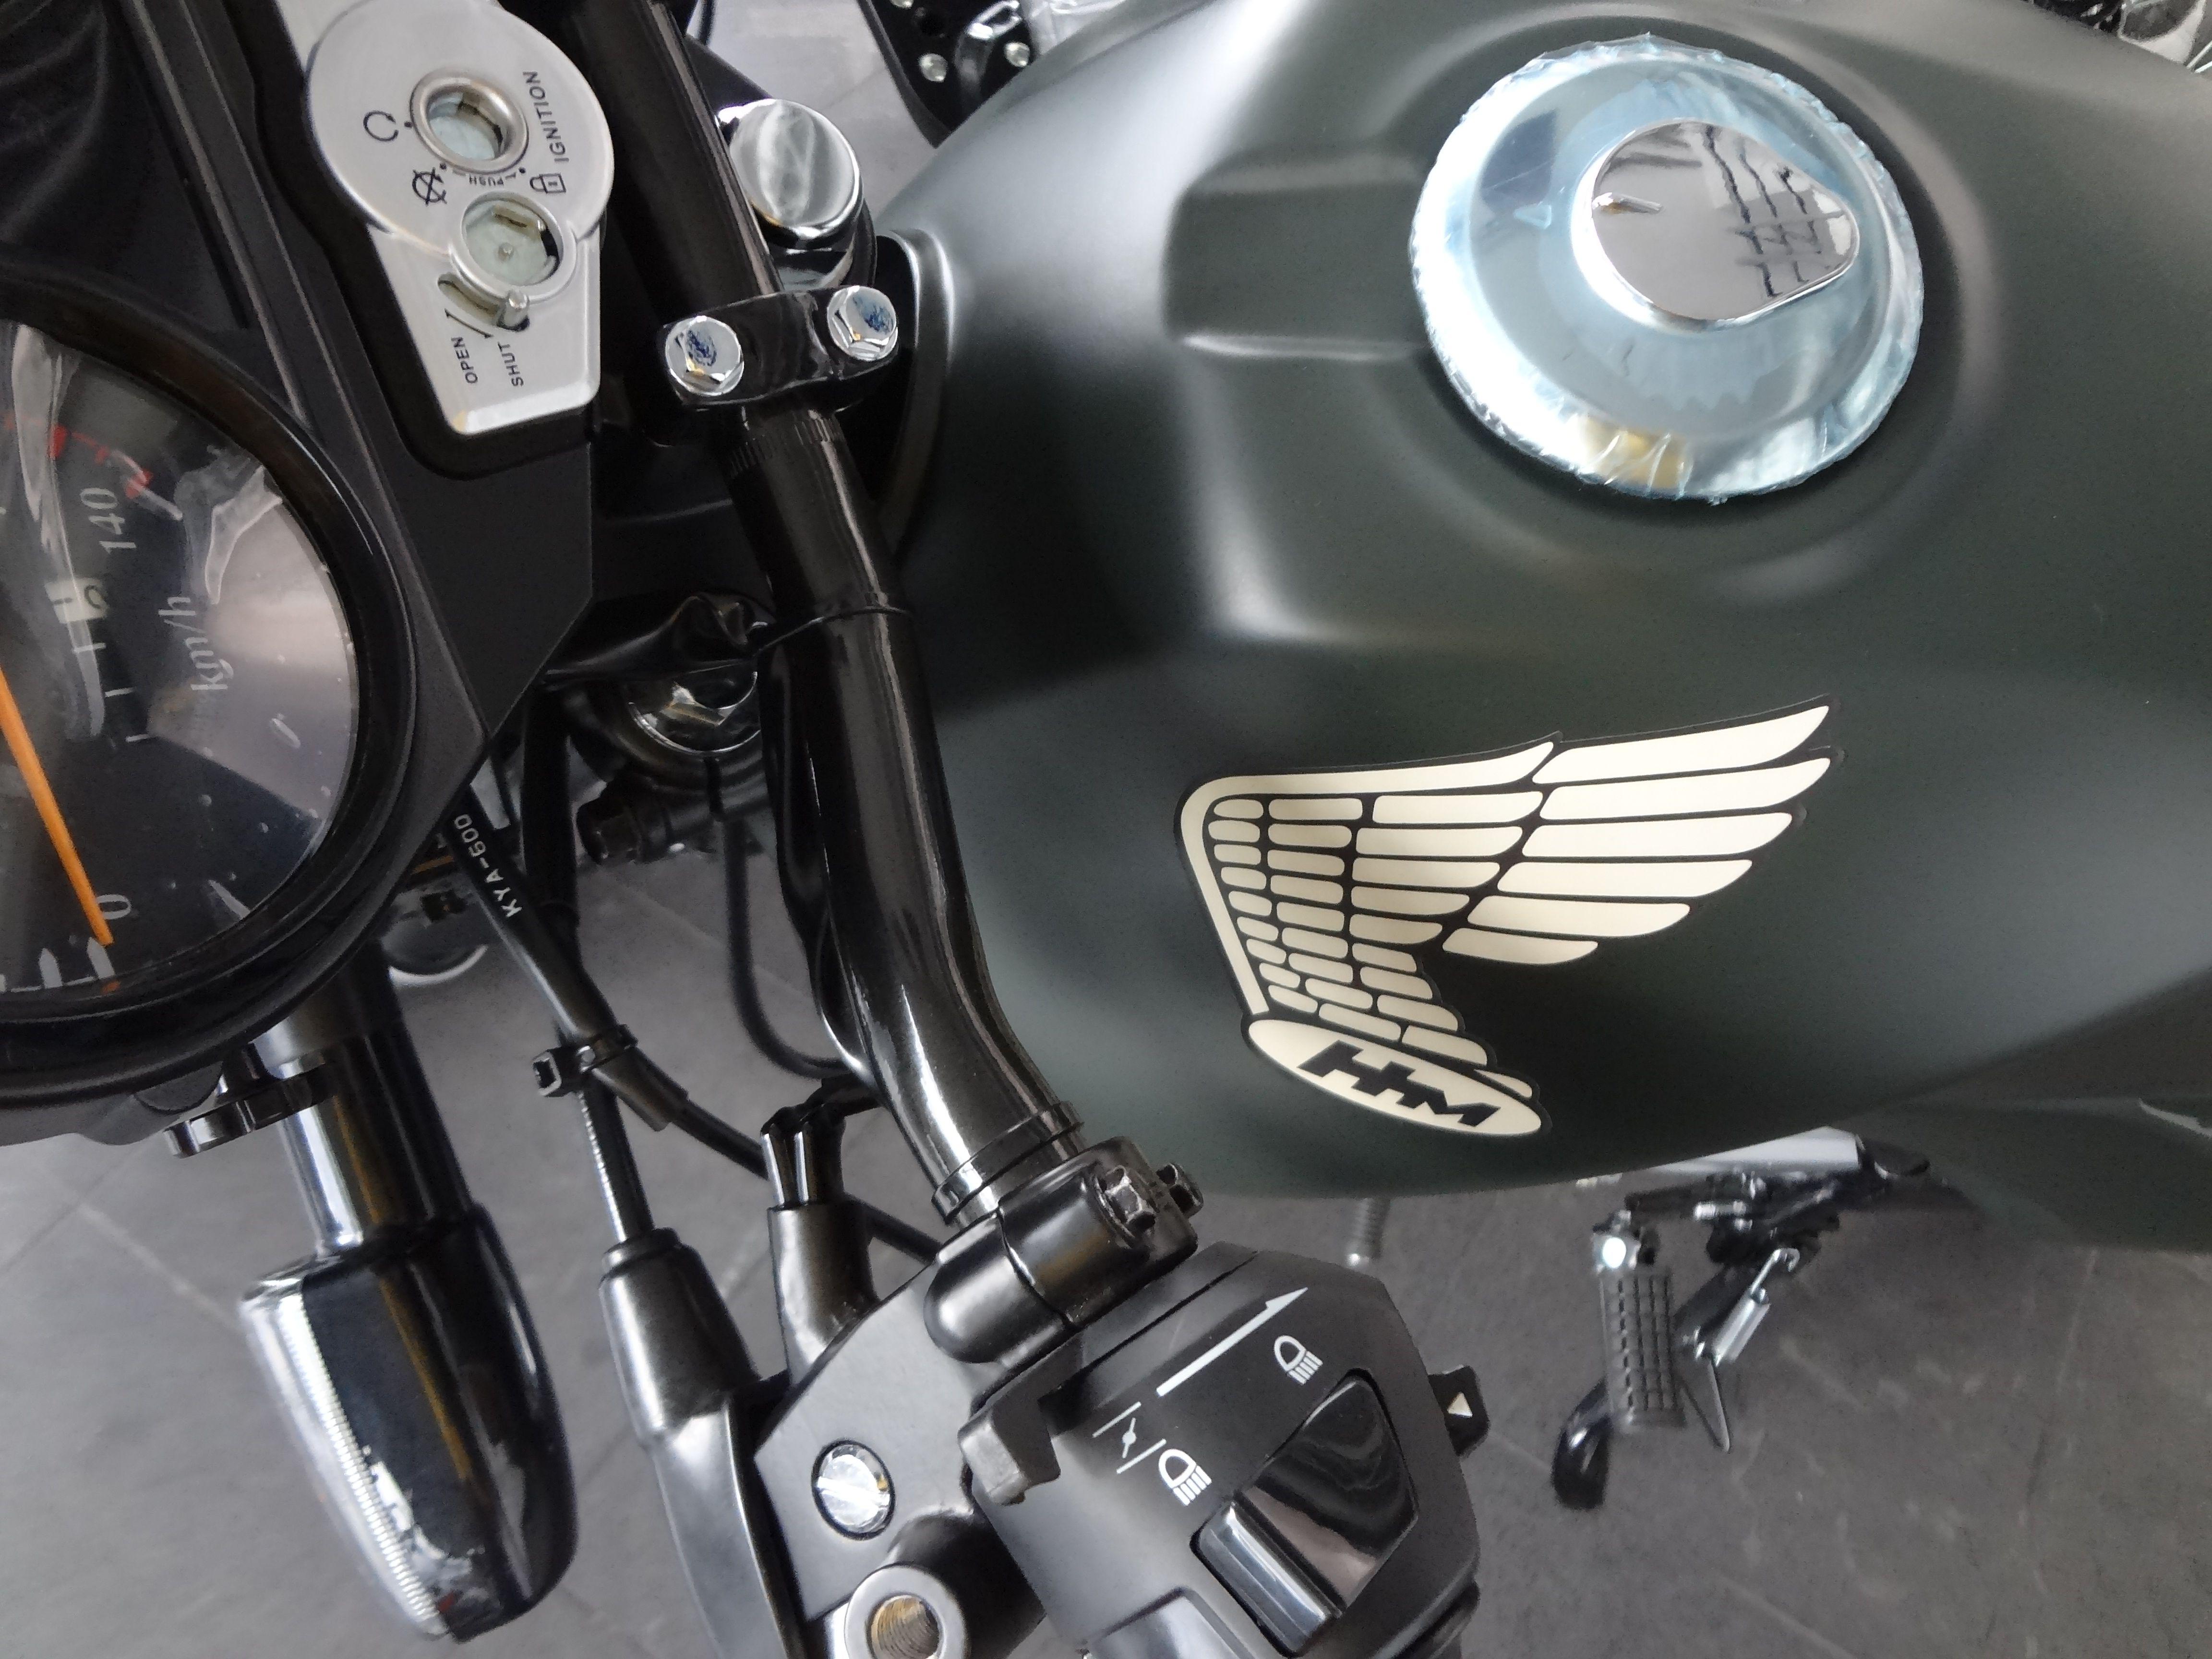 Vintage Honda Motorcycle Logo - Honda, brand new vintage style motorcycle, gas tank logo pic